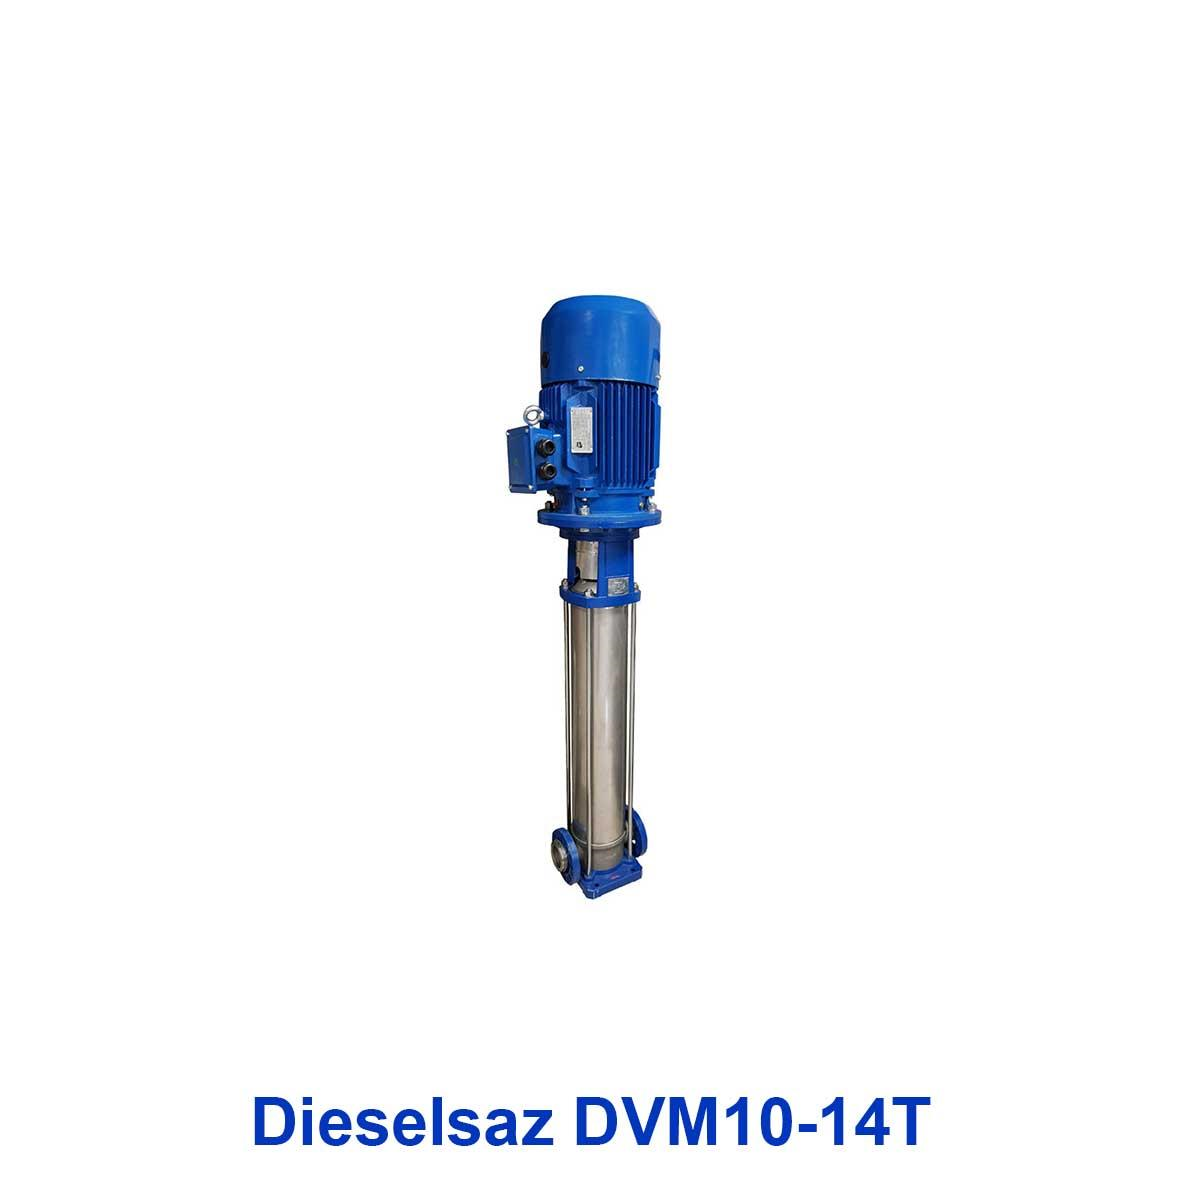 waterpump-vertical-Dieselsaz-DVM10-14T